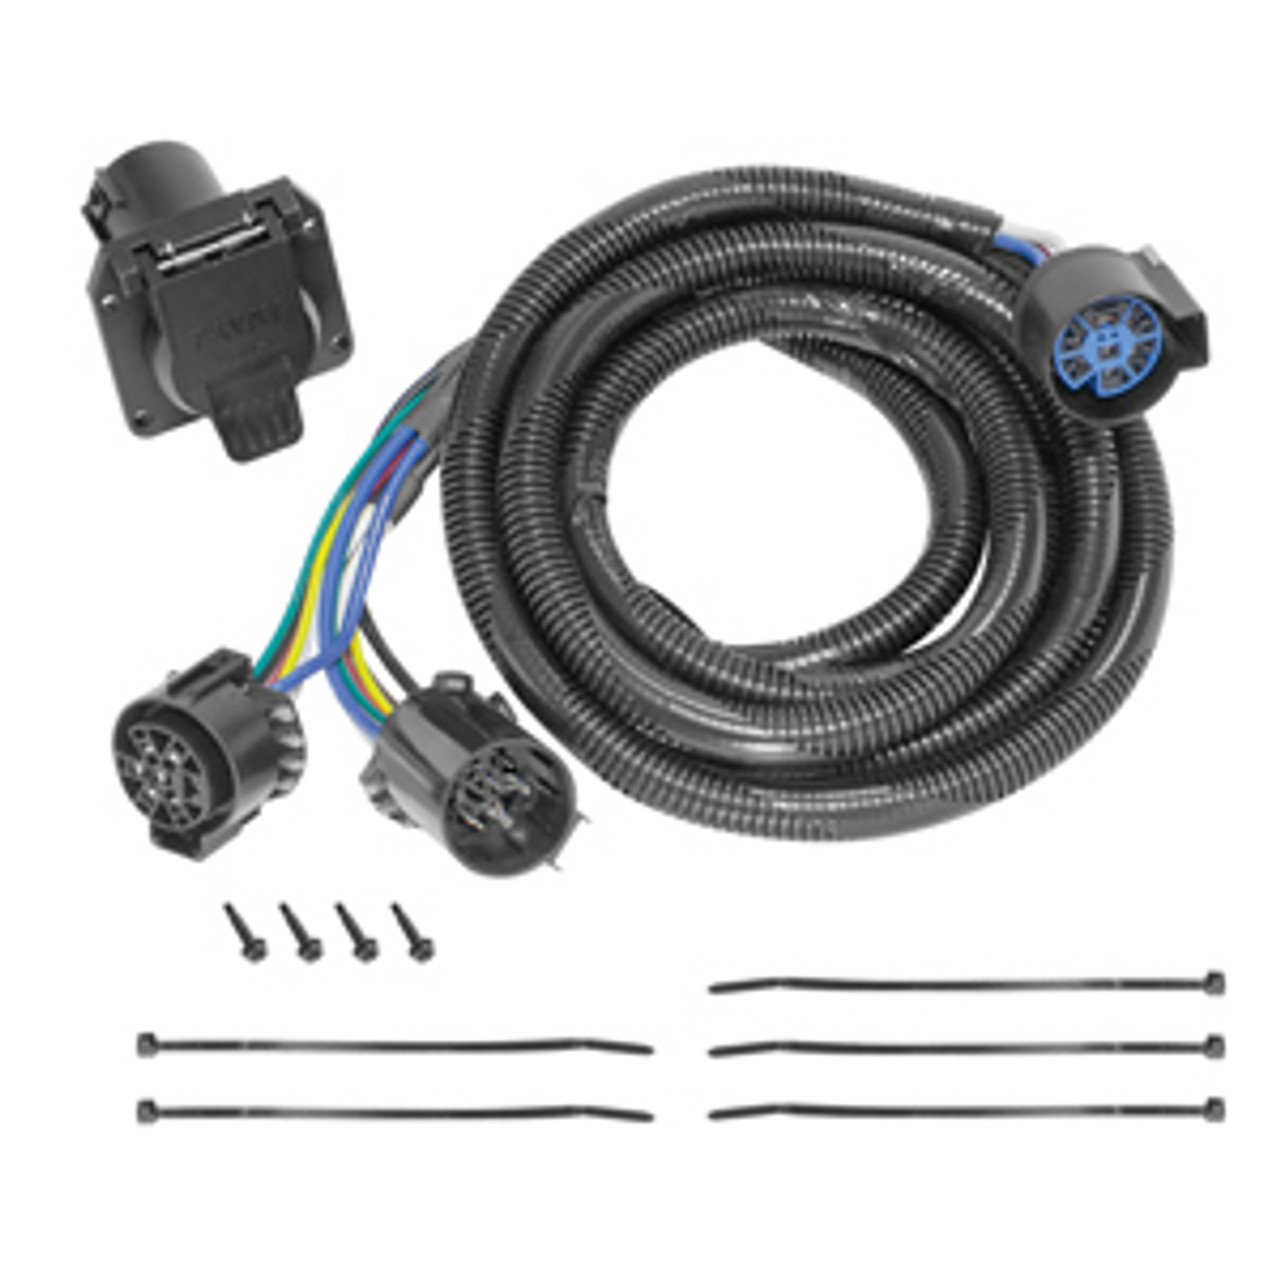 20146 --- Tekonsha 5th Wheel Adapter Harness -7-Way Flat Pin U.S. Car Connector Assembly 9'